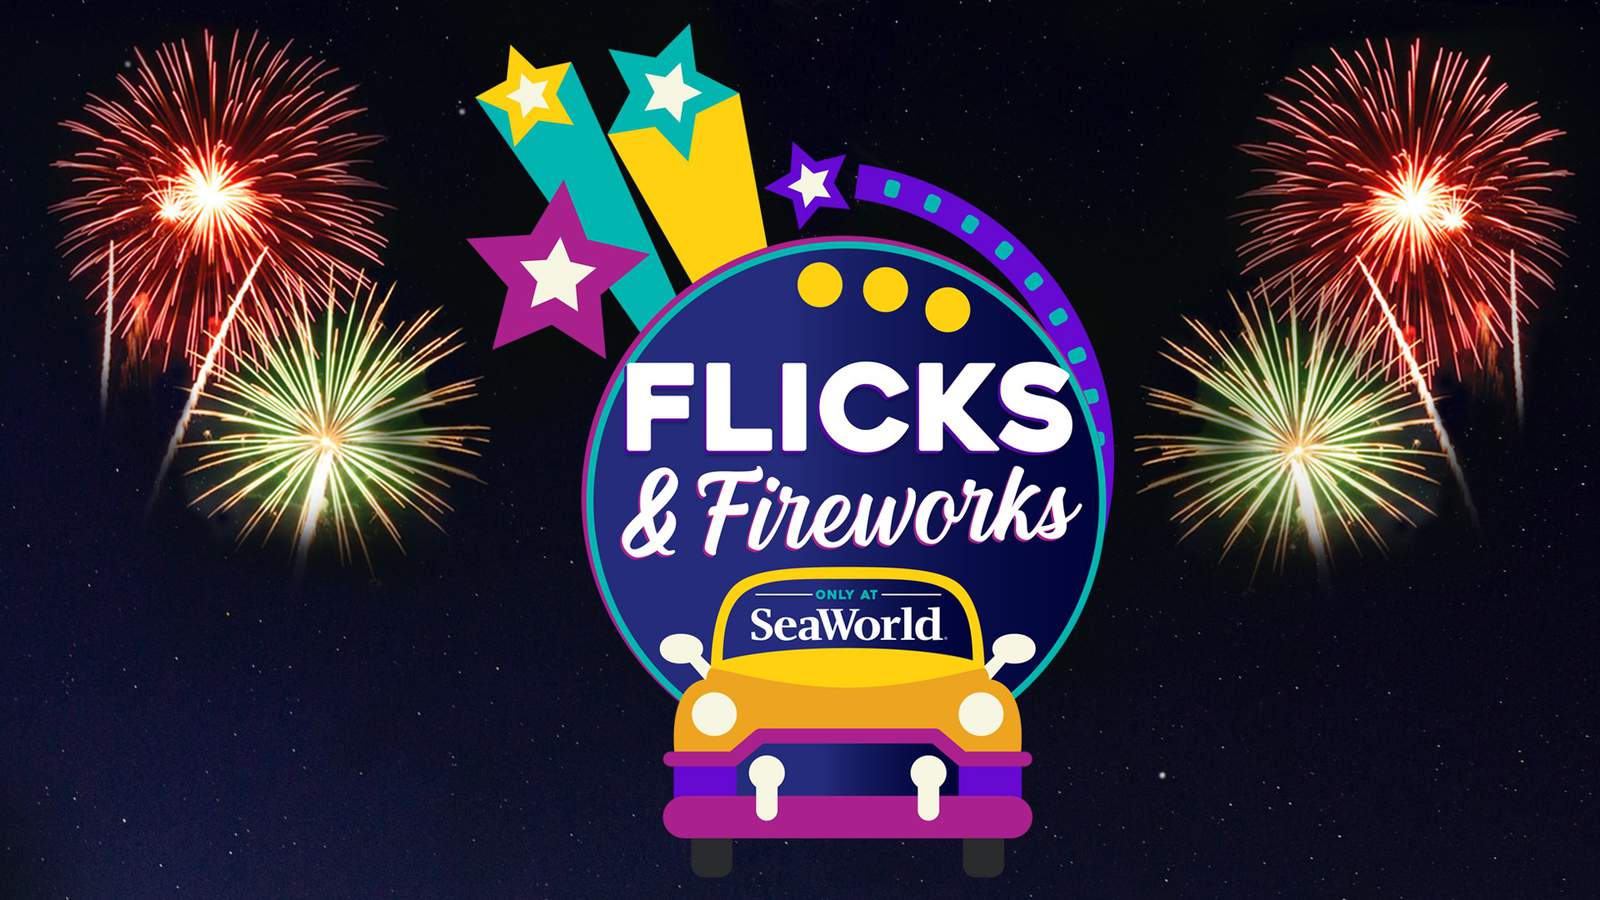 SeaWorld Orlando to host all-new Flicks & Fireworks event